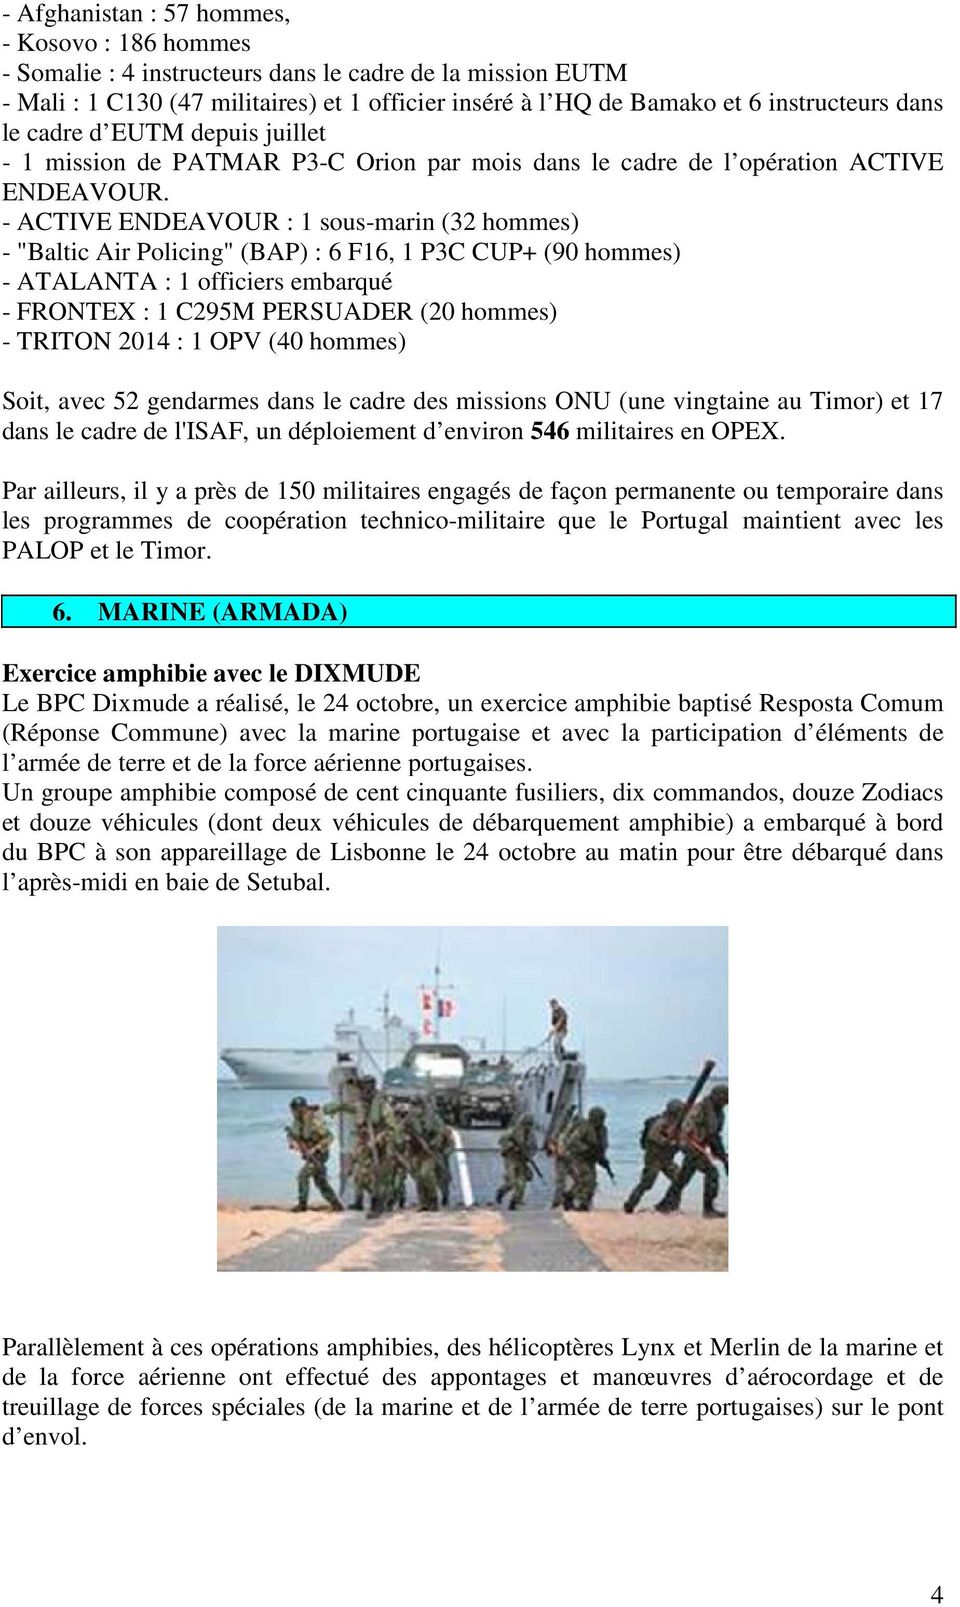 - ACTIVE ENDEAVOUR : 1 sous-marin (32 hommes) - "Baltic Air Policing" (BAP) : 6 F16, 1 P3C CUP+ (90 hommes) - ATALANTA : 1 officiers embarqué - FRONTEX : 1 C295M PERSUADER (20 hommes) - TRITON 2014 :